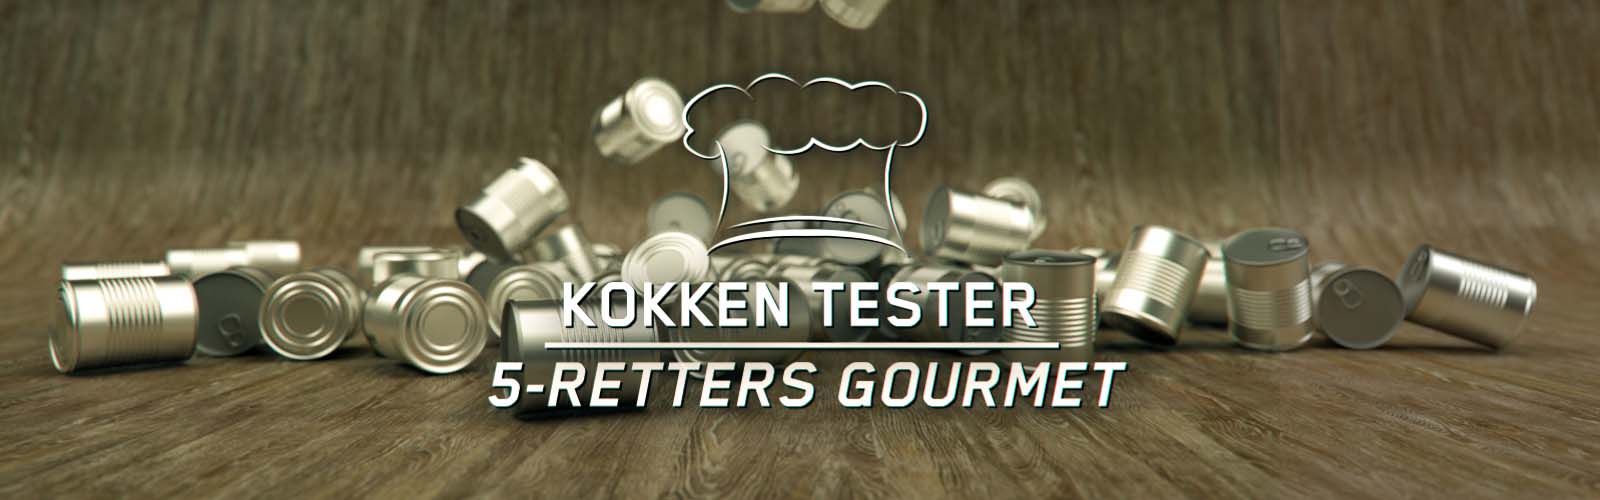 Kokken tester: 5-retters gourmet